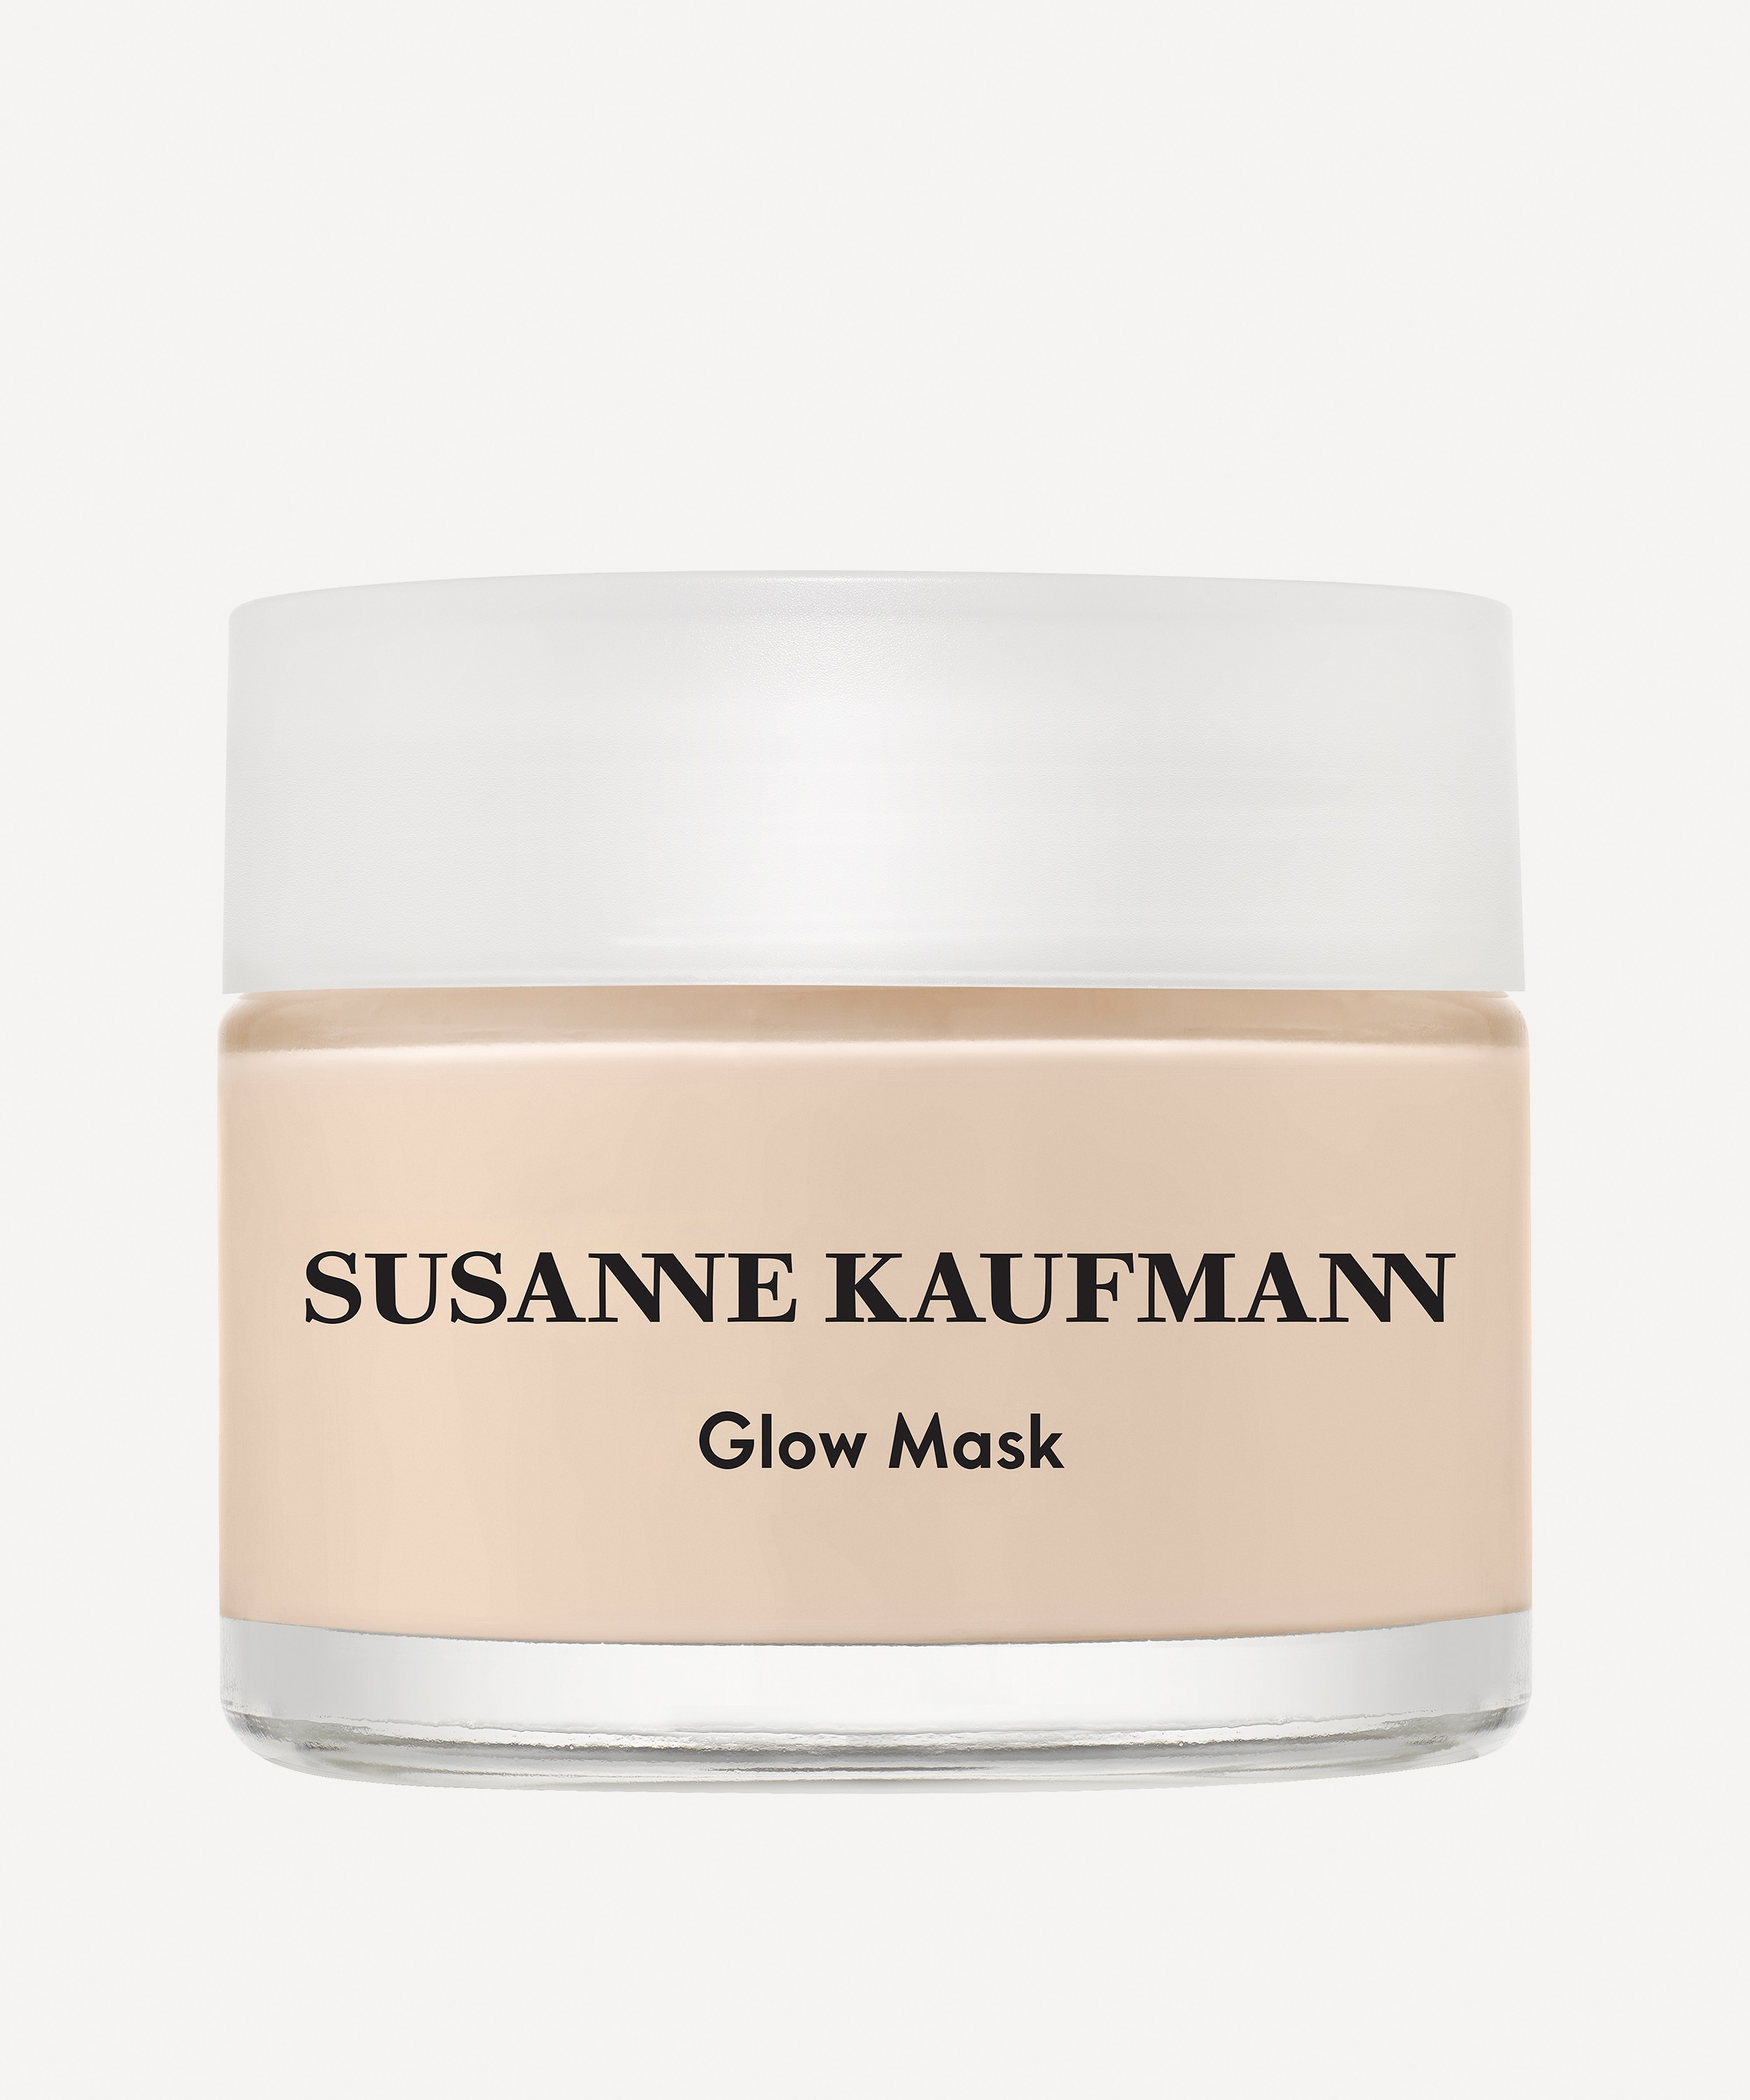 Susanne Kaufmann - Glow Mask 50ml image number 0